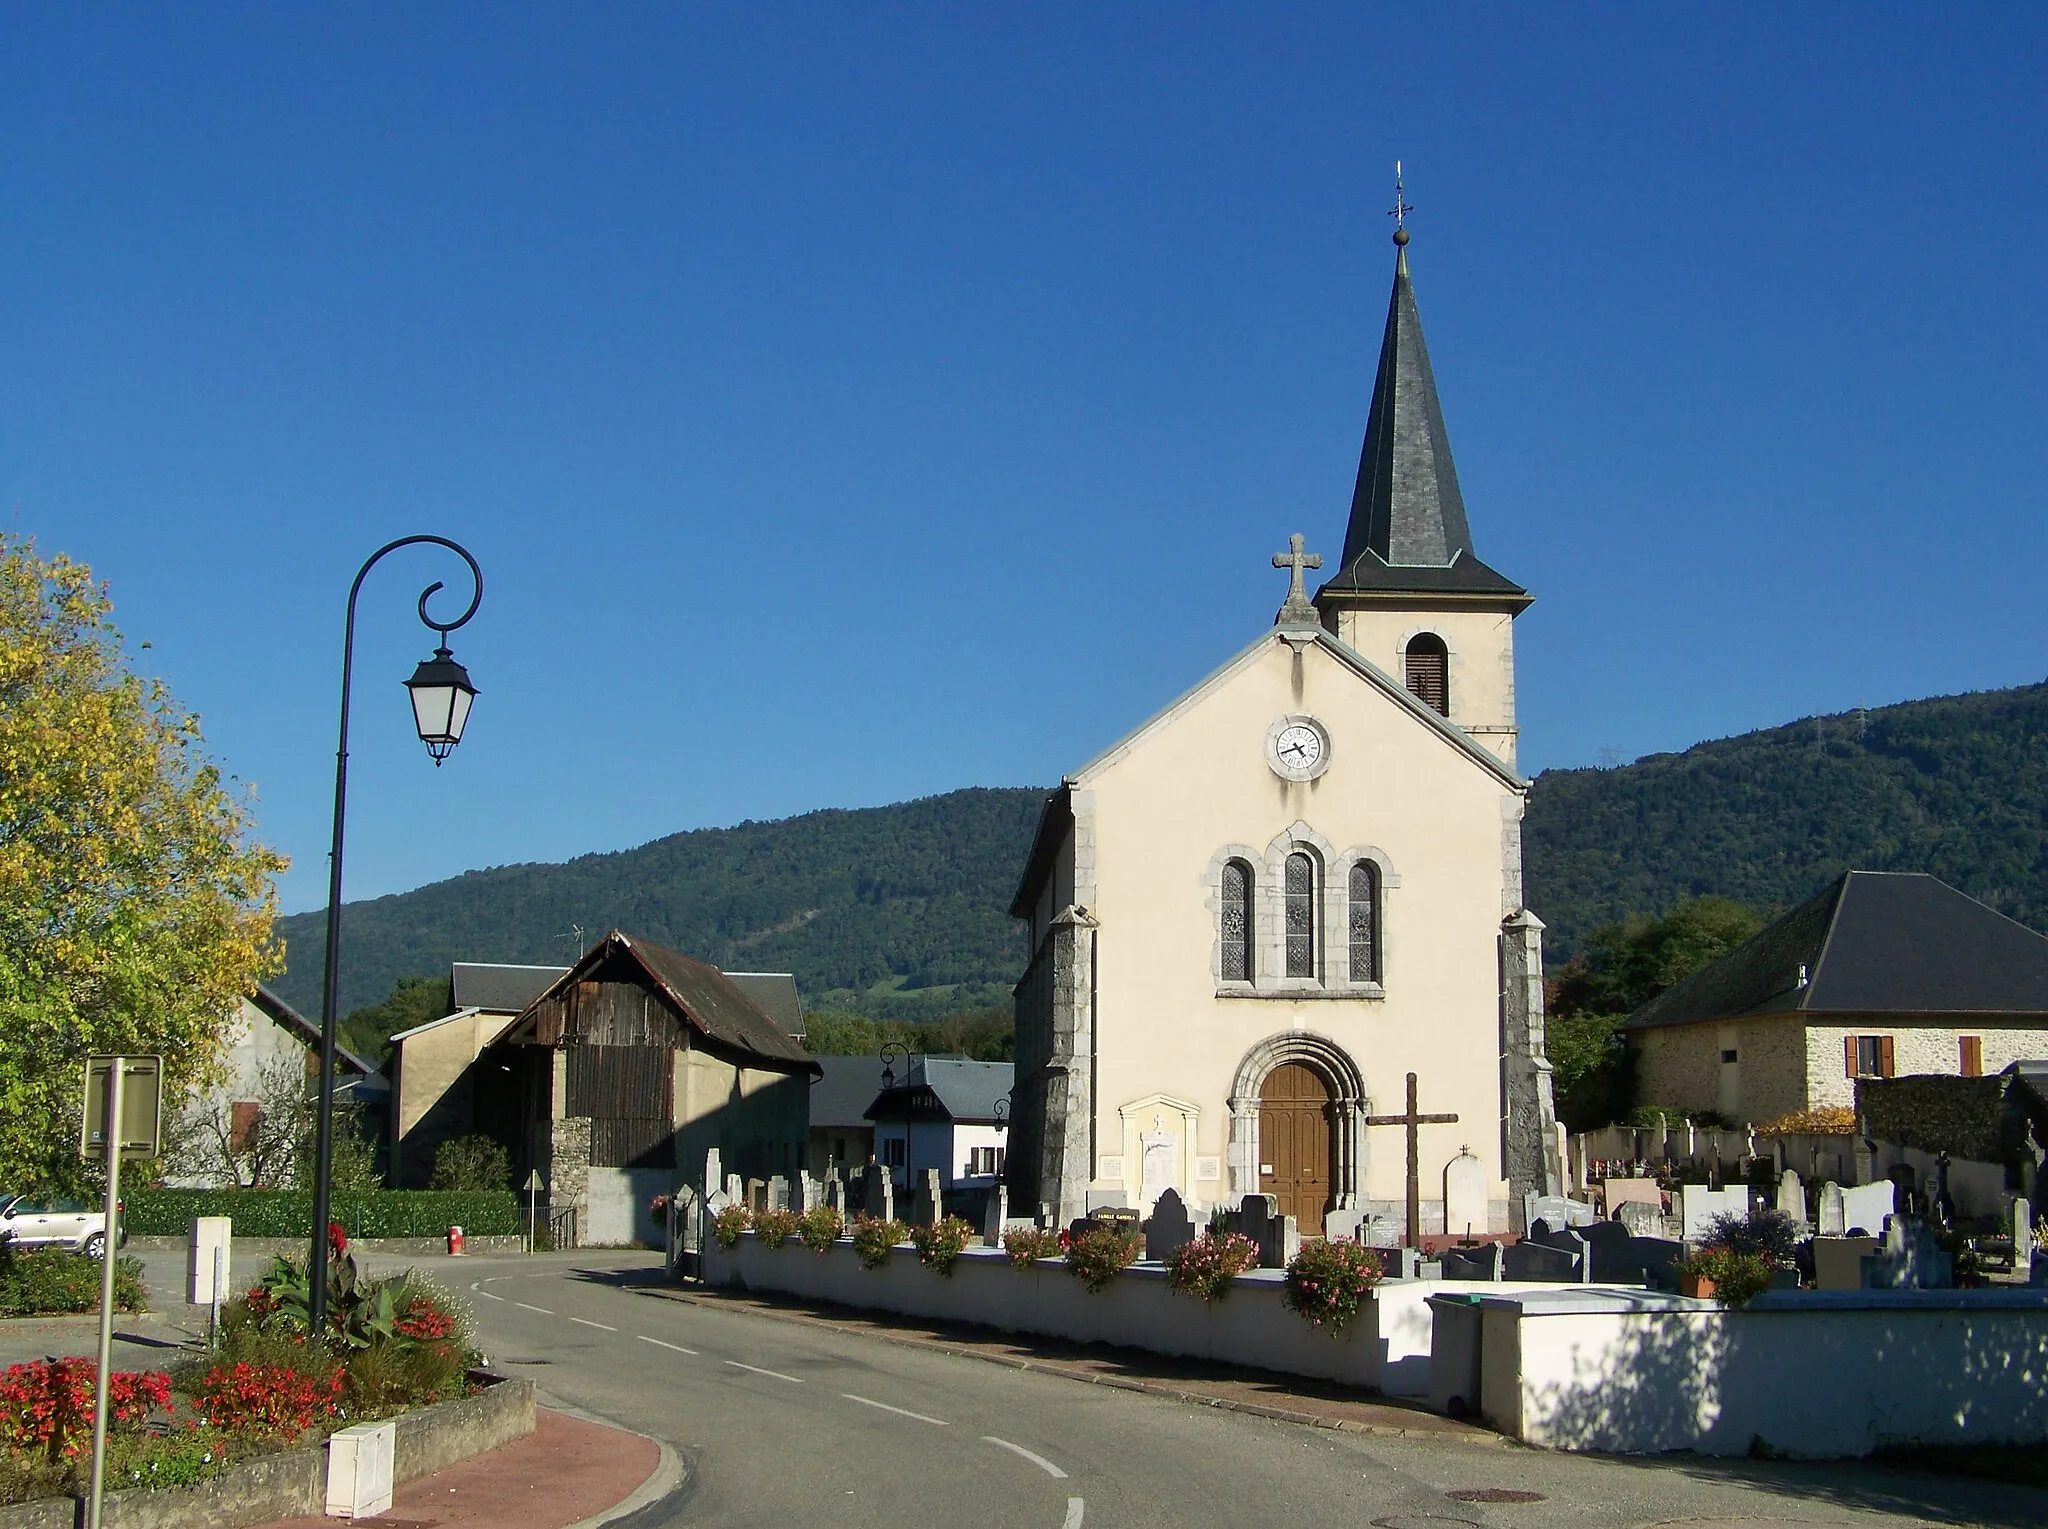 Photo showing: Main street and church of Sante-Hélène-du-Lac village in Savoie, France.